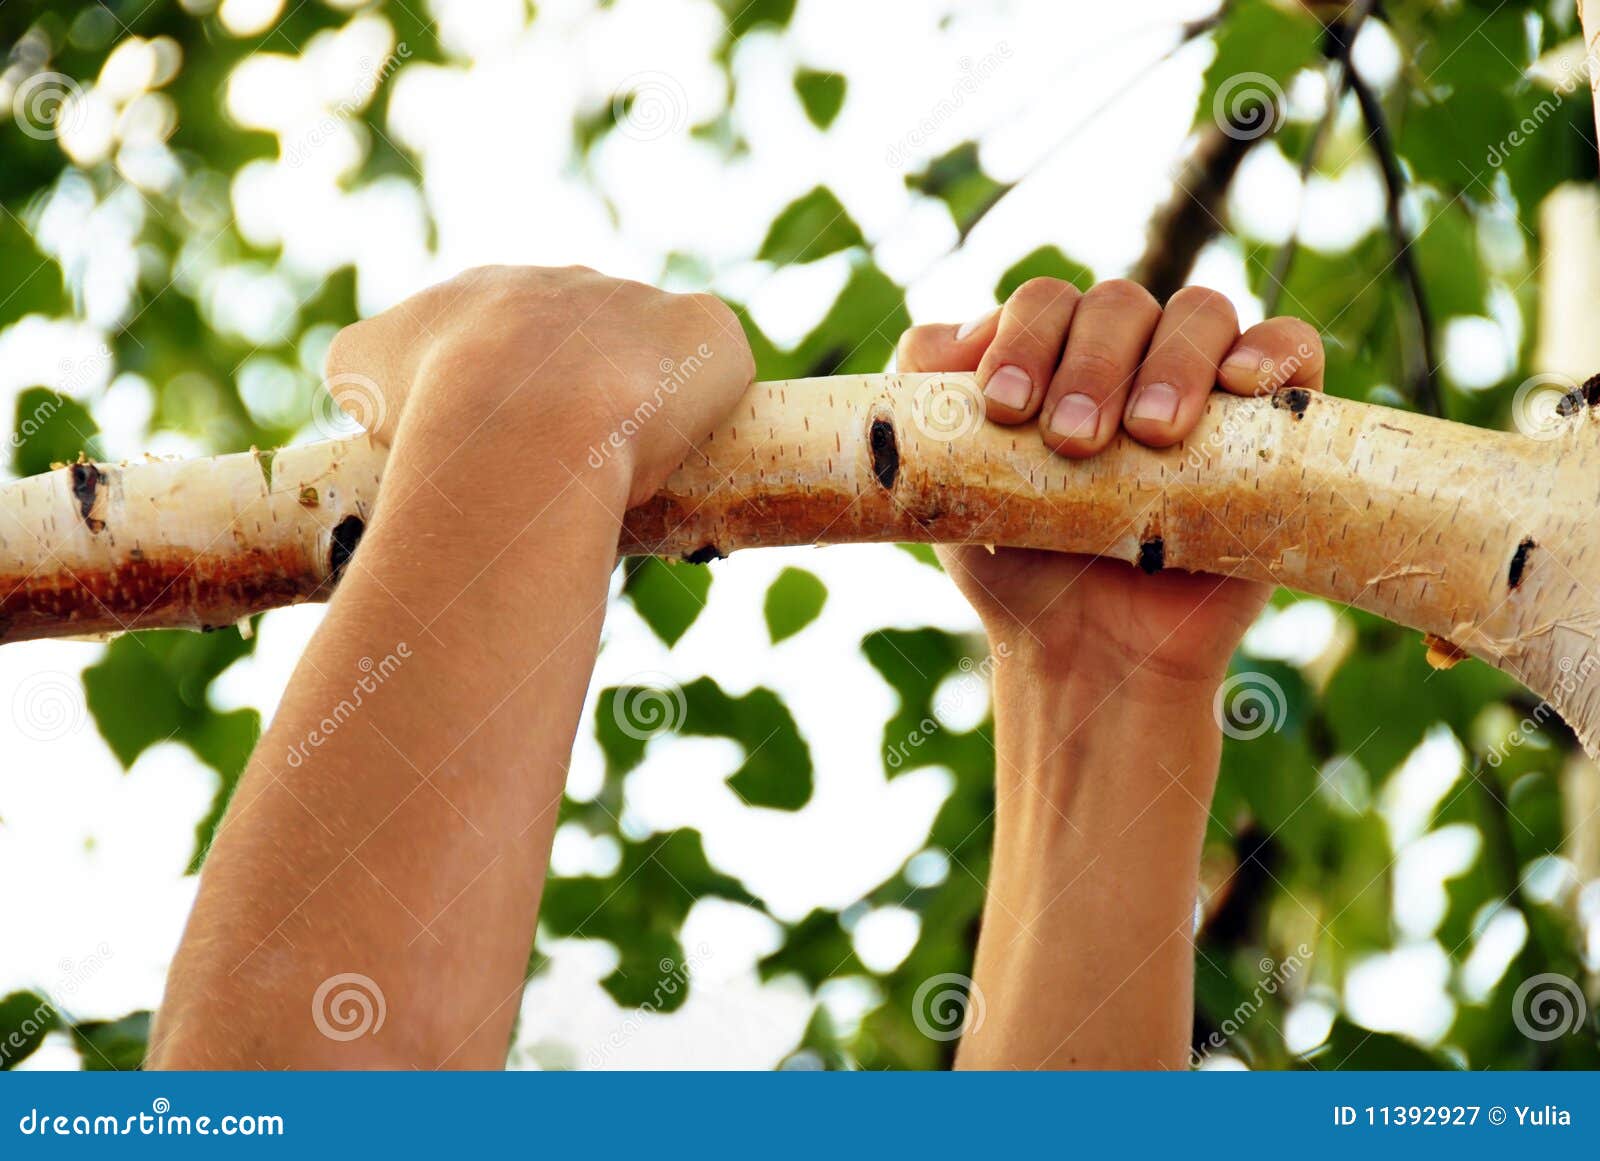 Висит на березки. Рука держится за ветку. Дерево в руках. Человек висит на ветке. Береза и рука.